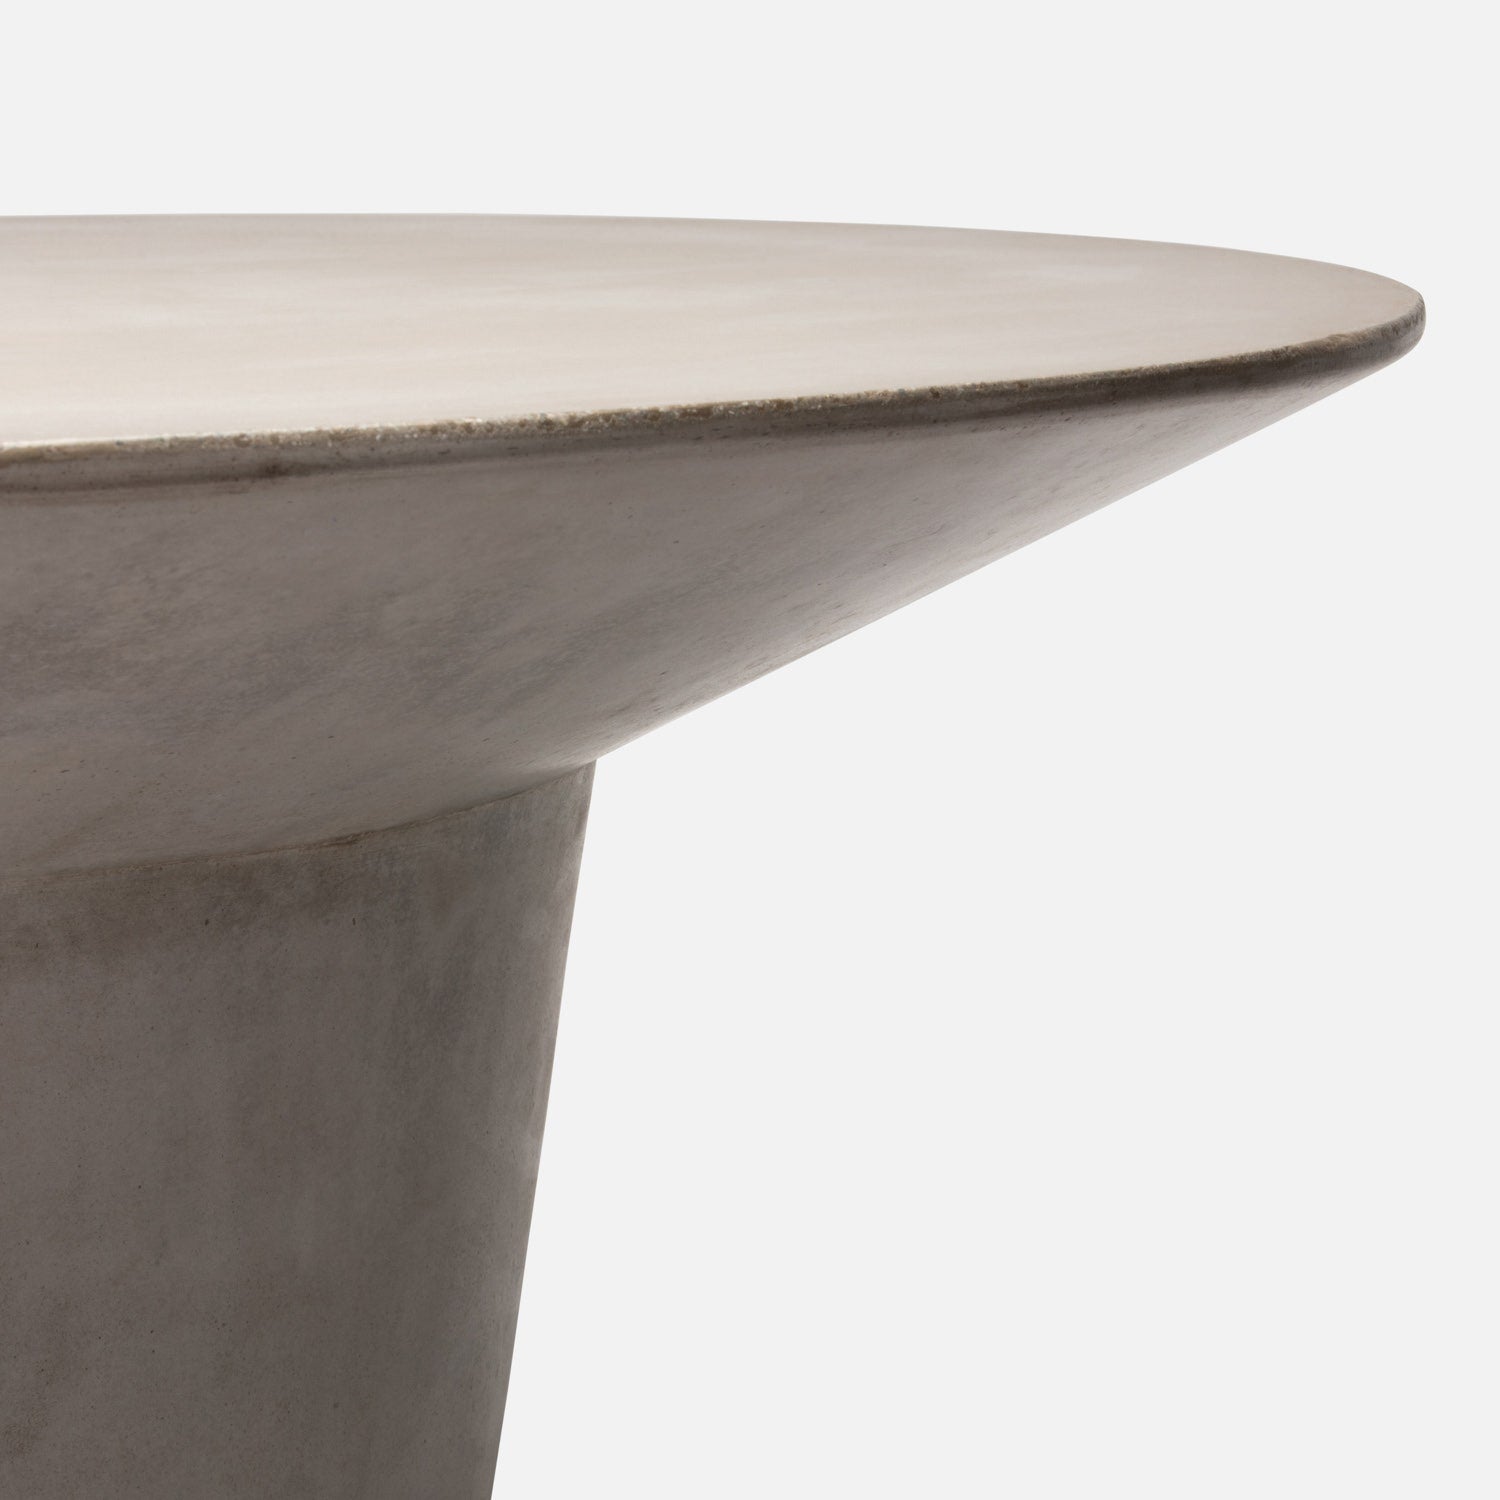 Sanger Concrete Side Table Gray 26"Dx24"H